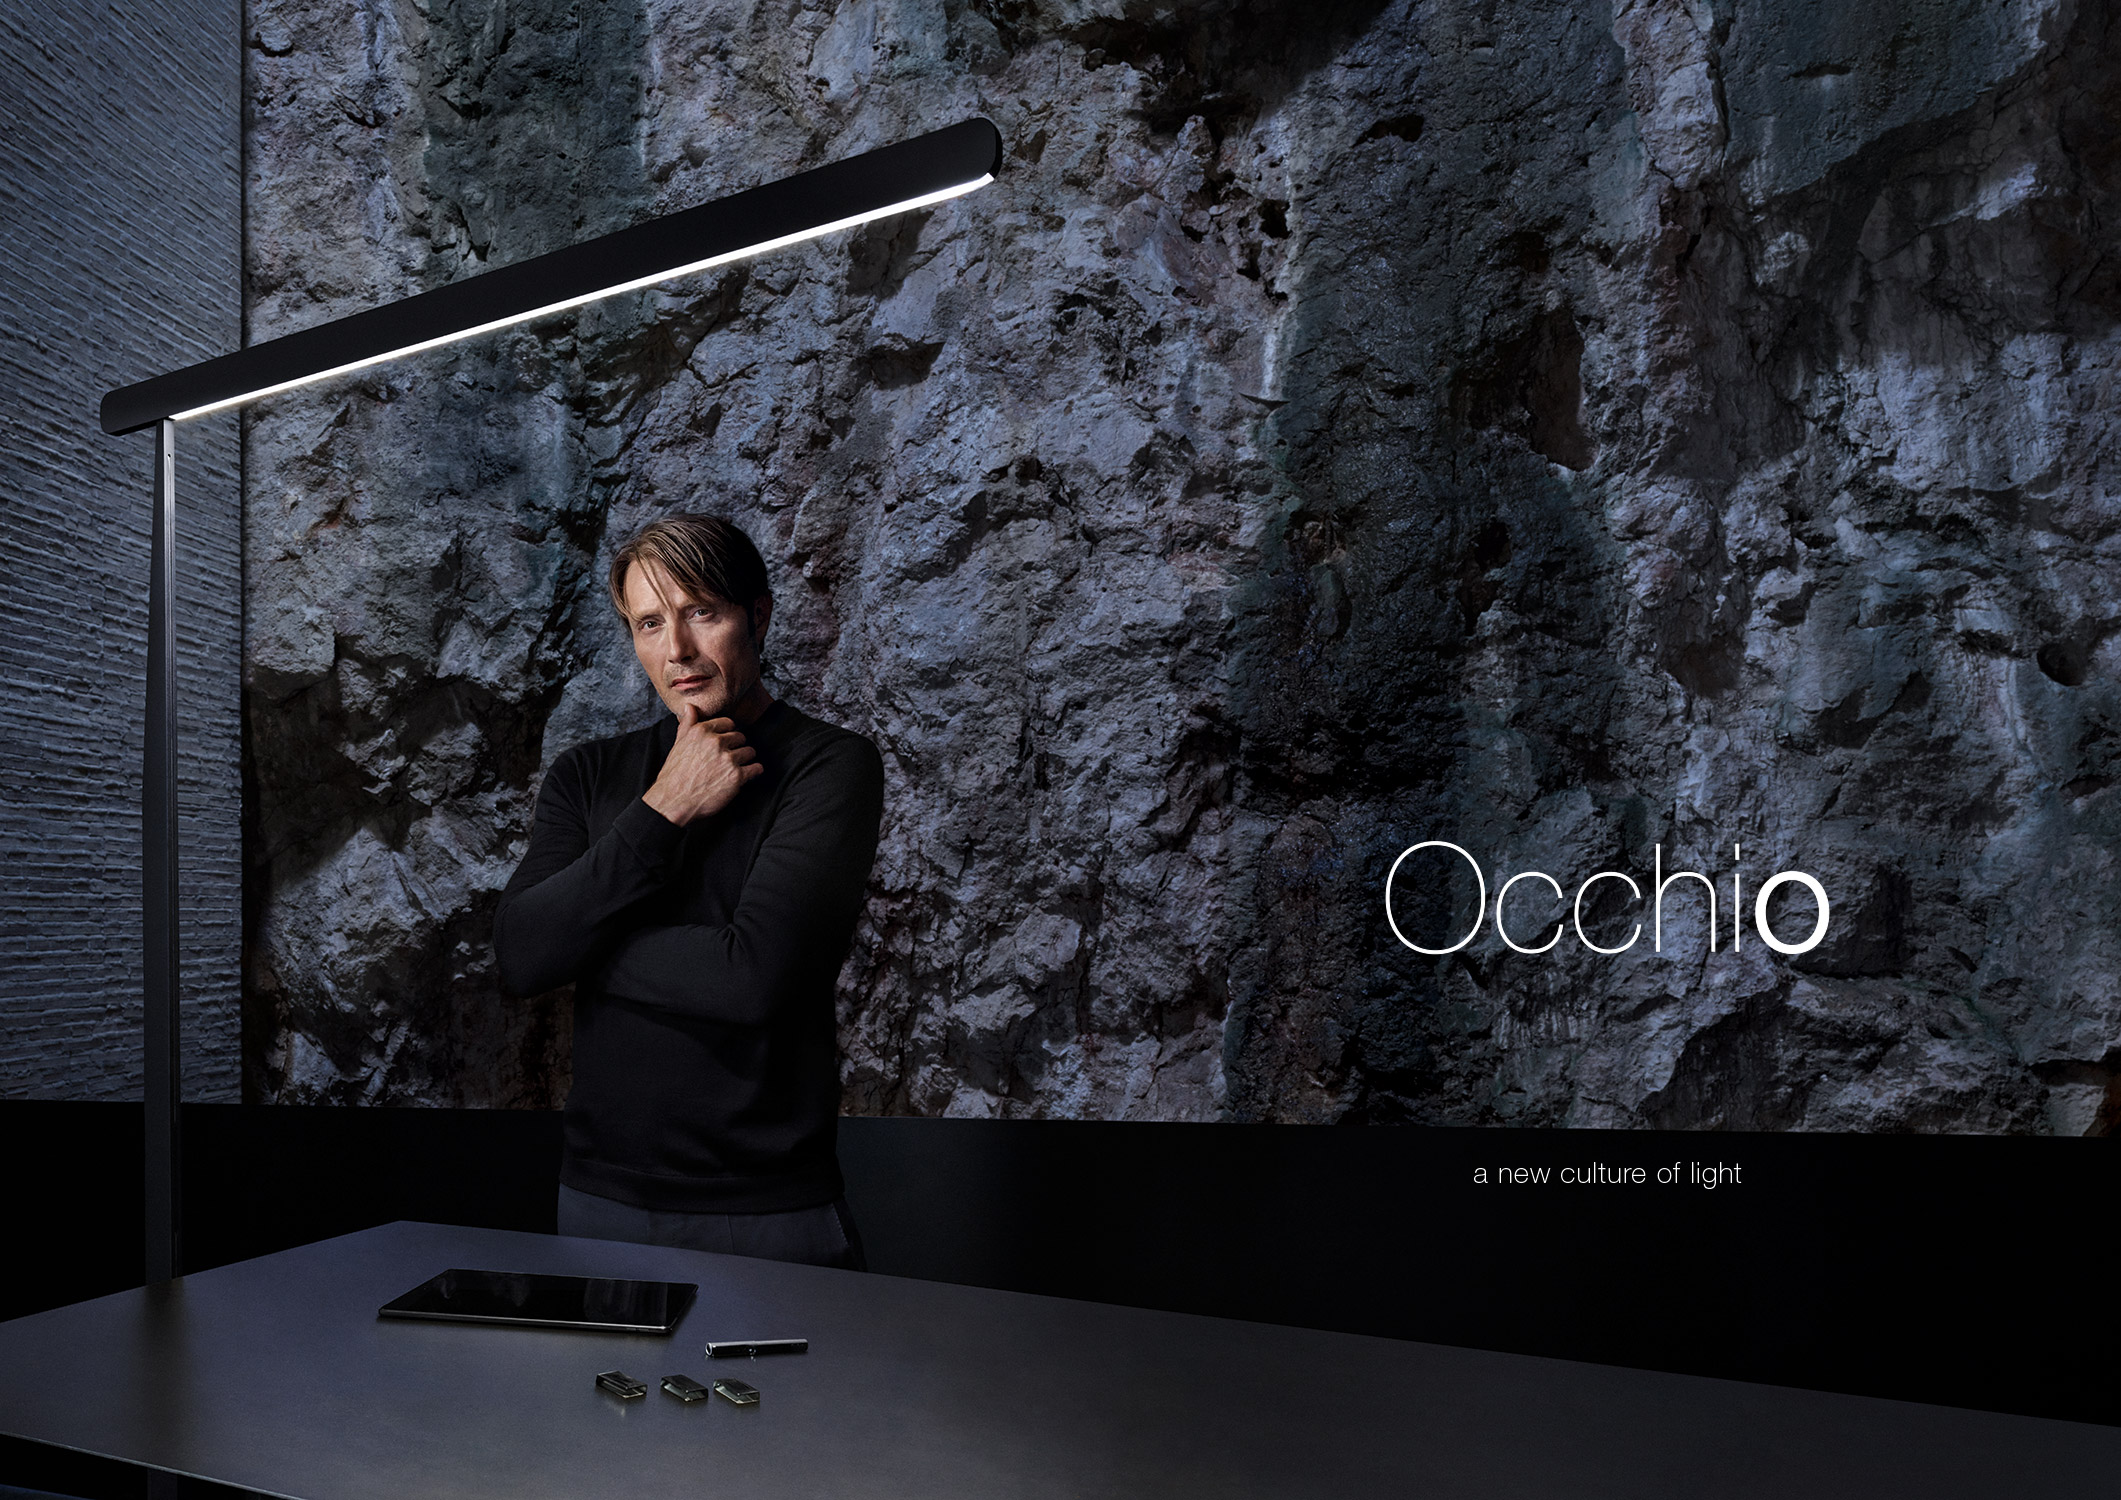 Occhio Official Website  We create a new culture of light